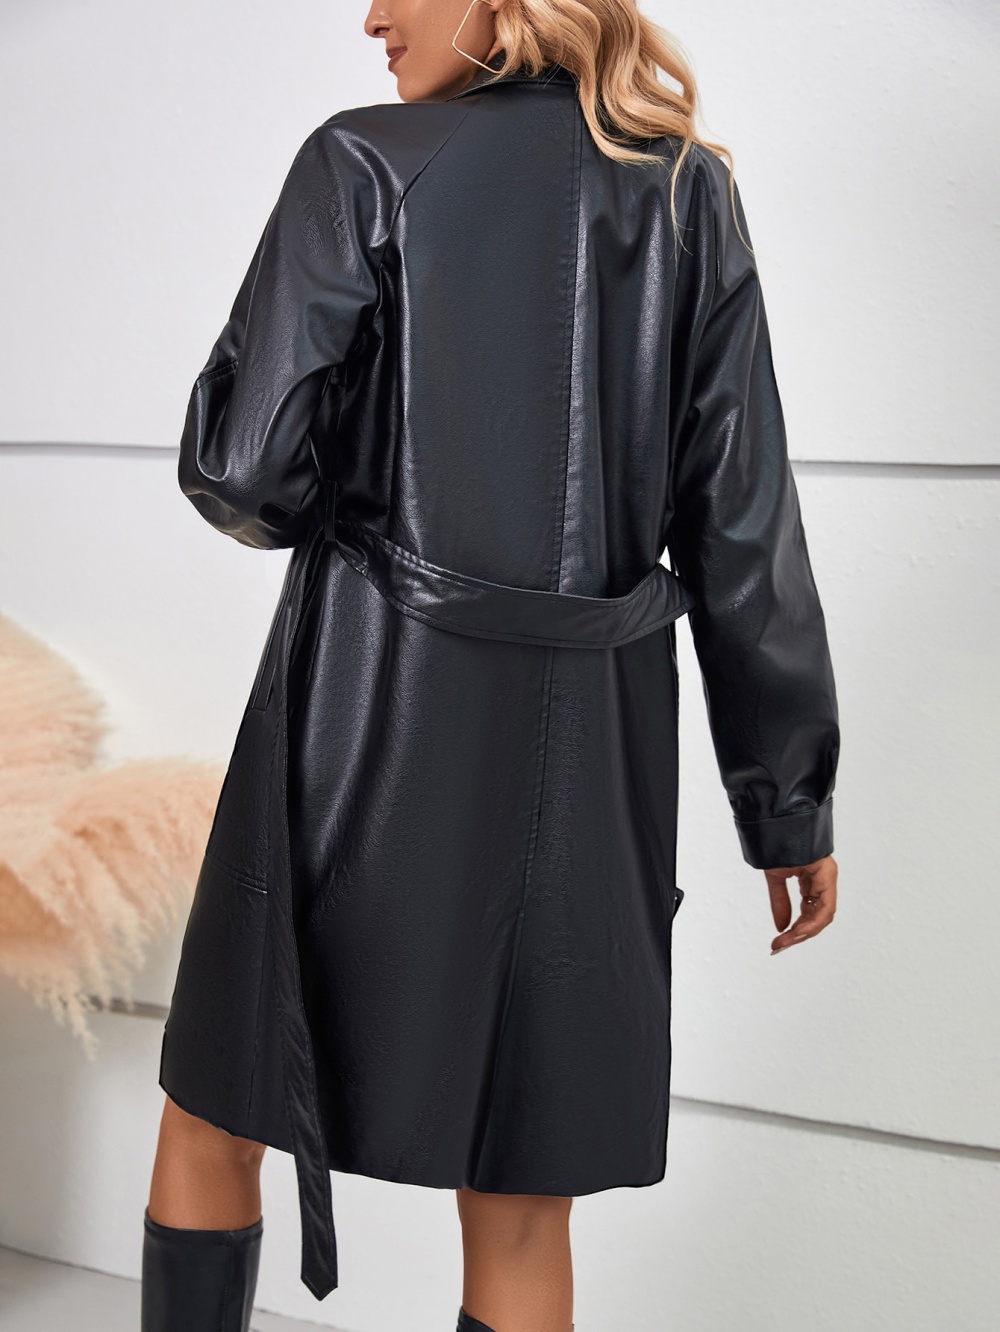 Long leather coat long sleeve belt for women